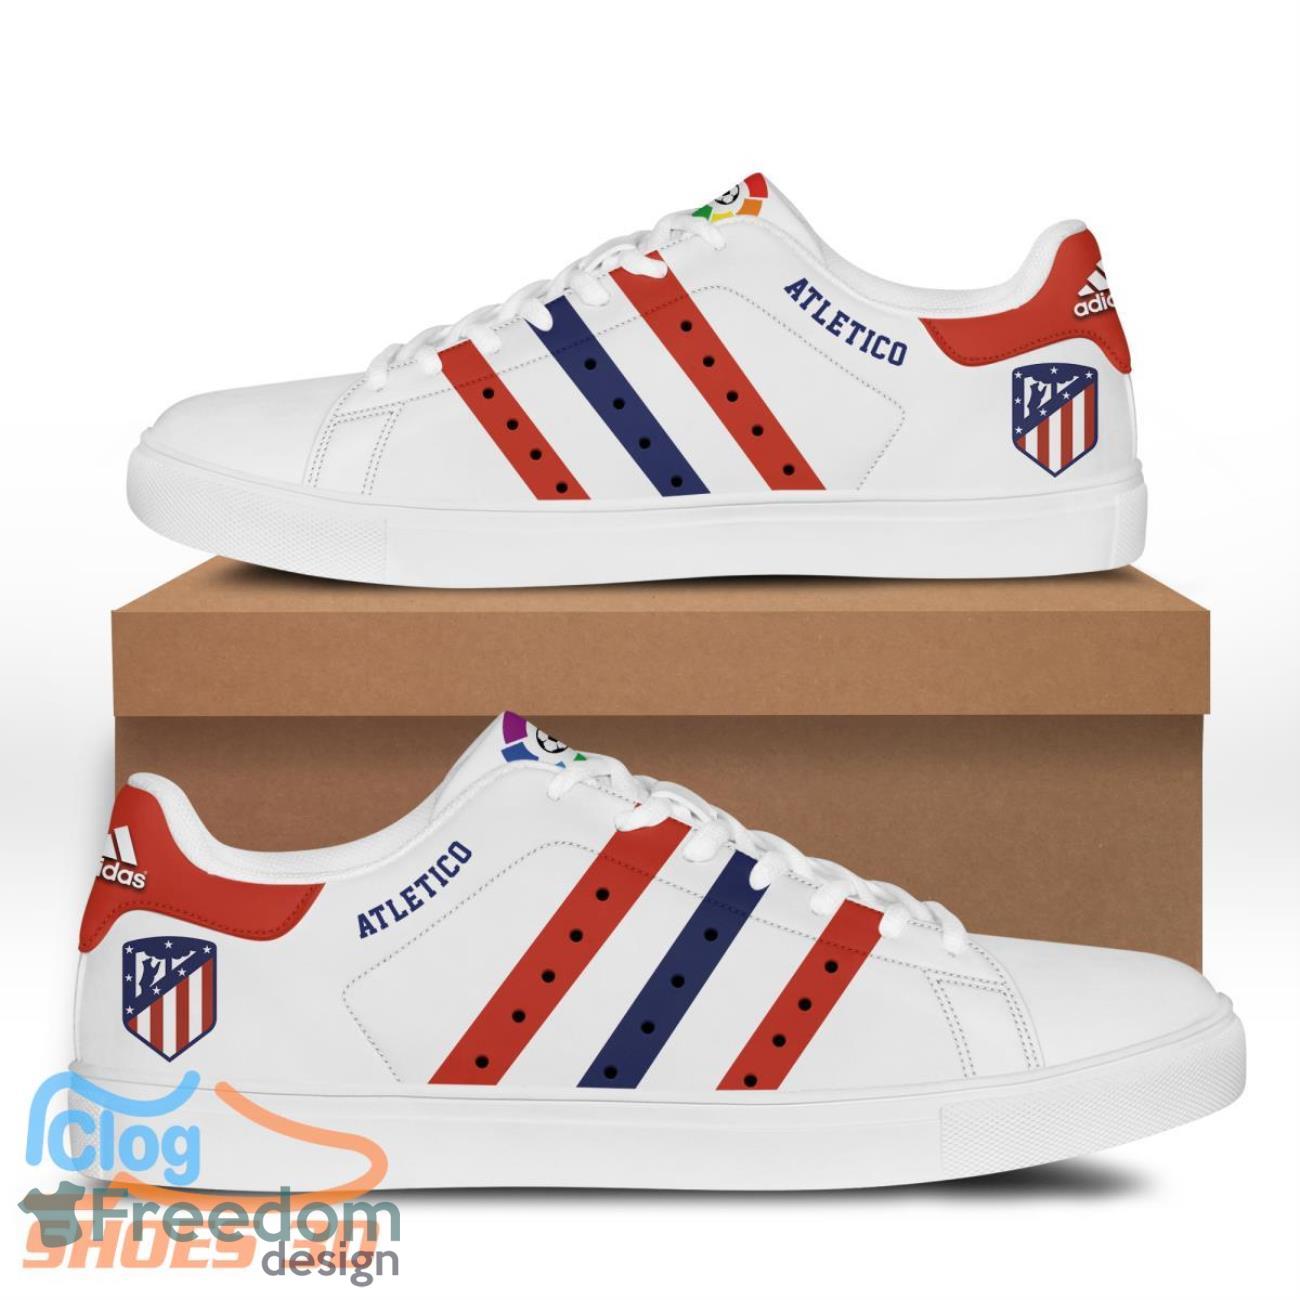 Atlético de Madrid Skate Stan Smith Shoes Product Photo 1